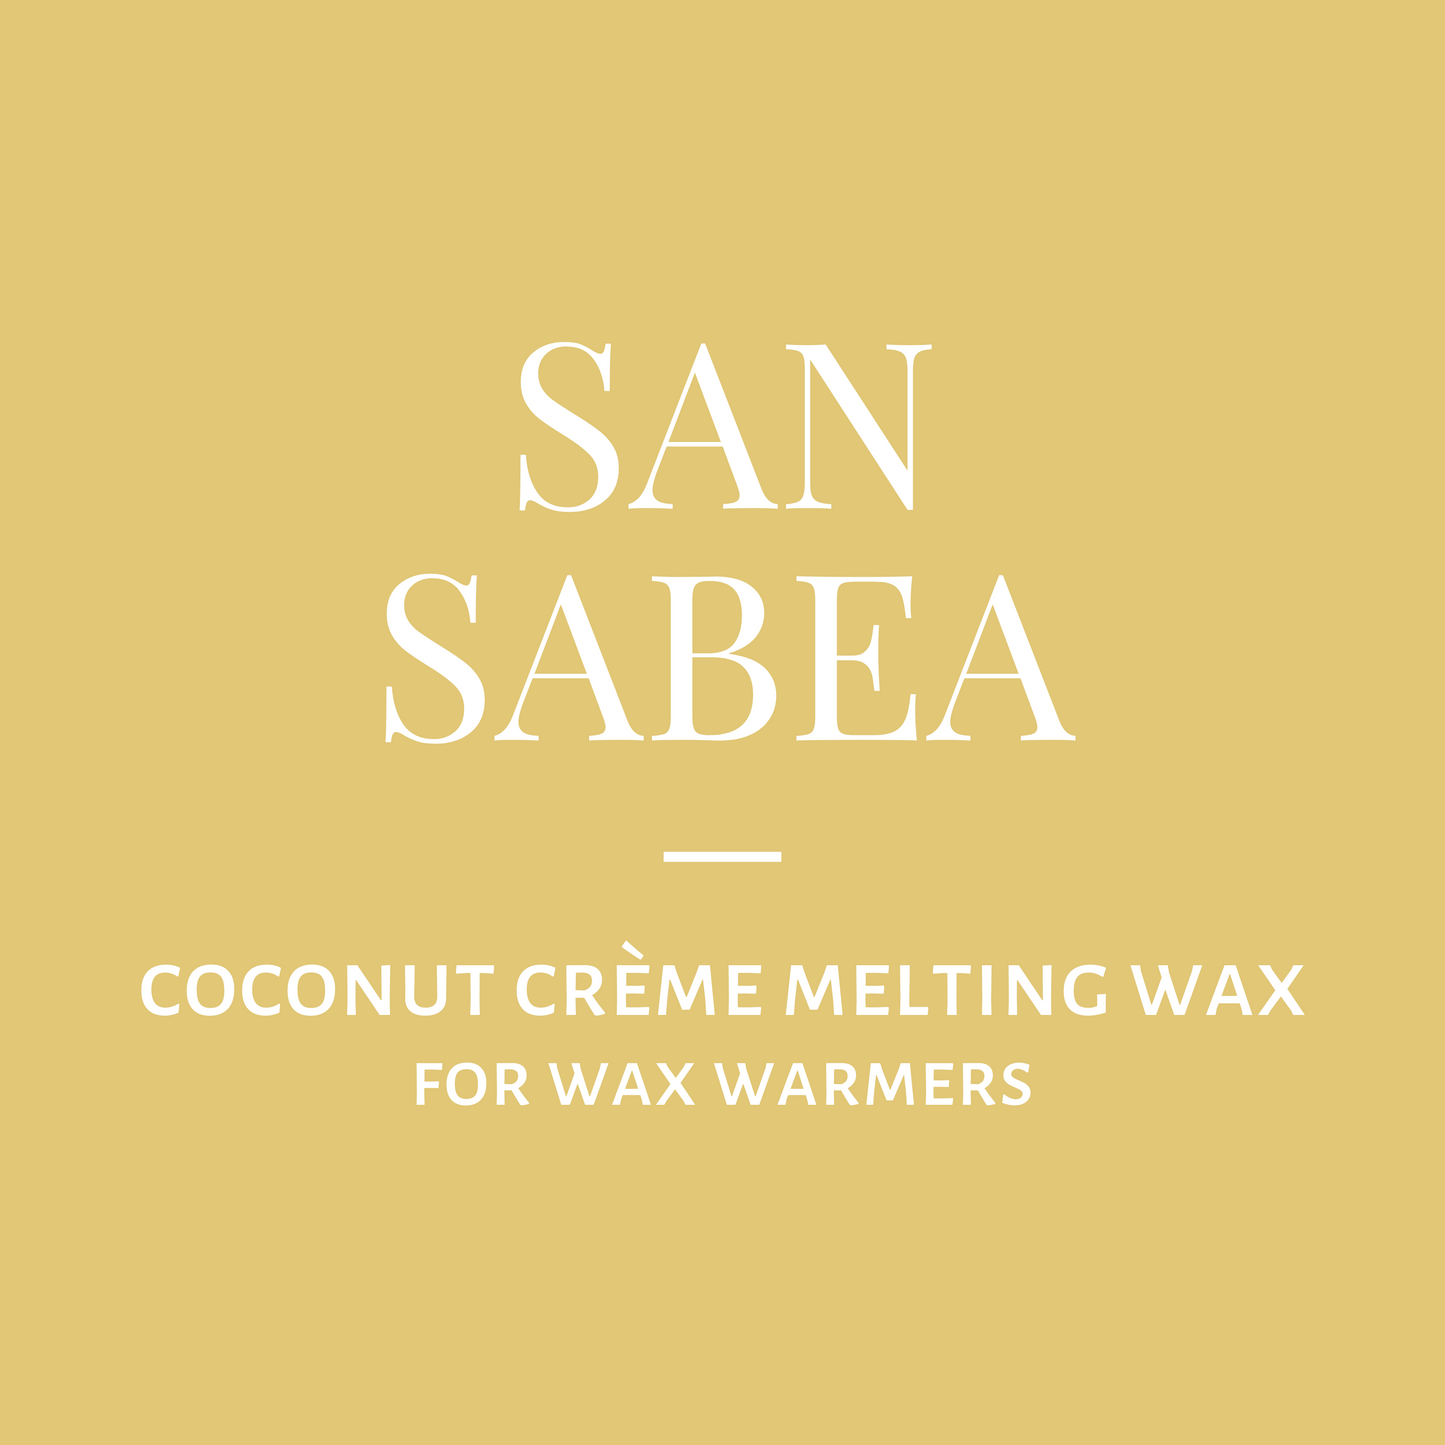 Melting Wax-San Sabea